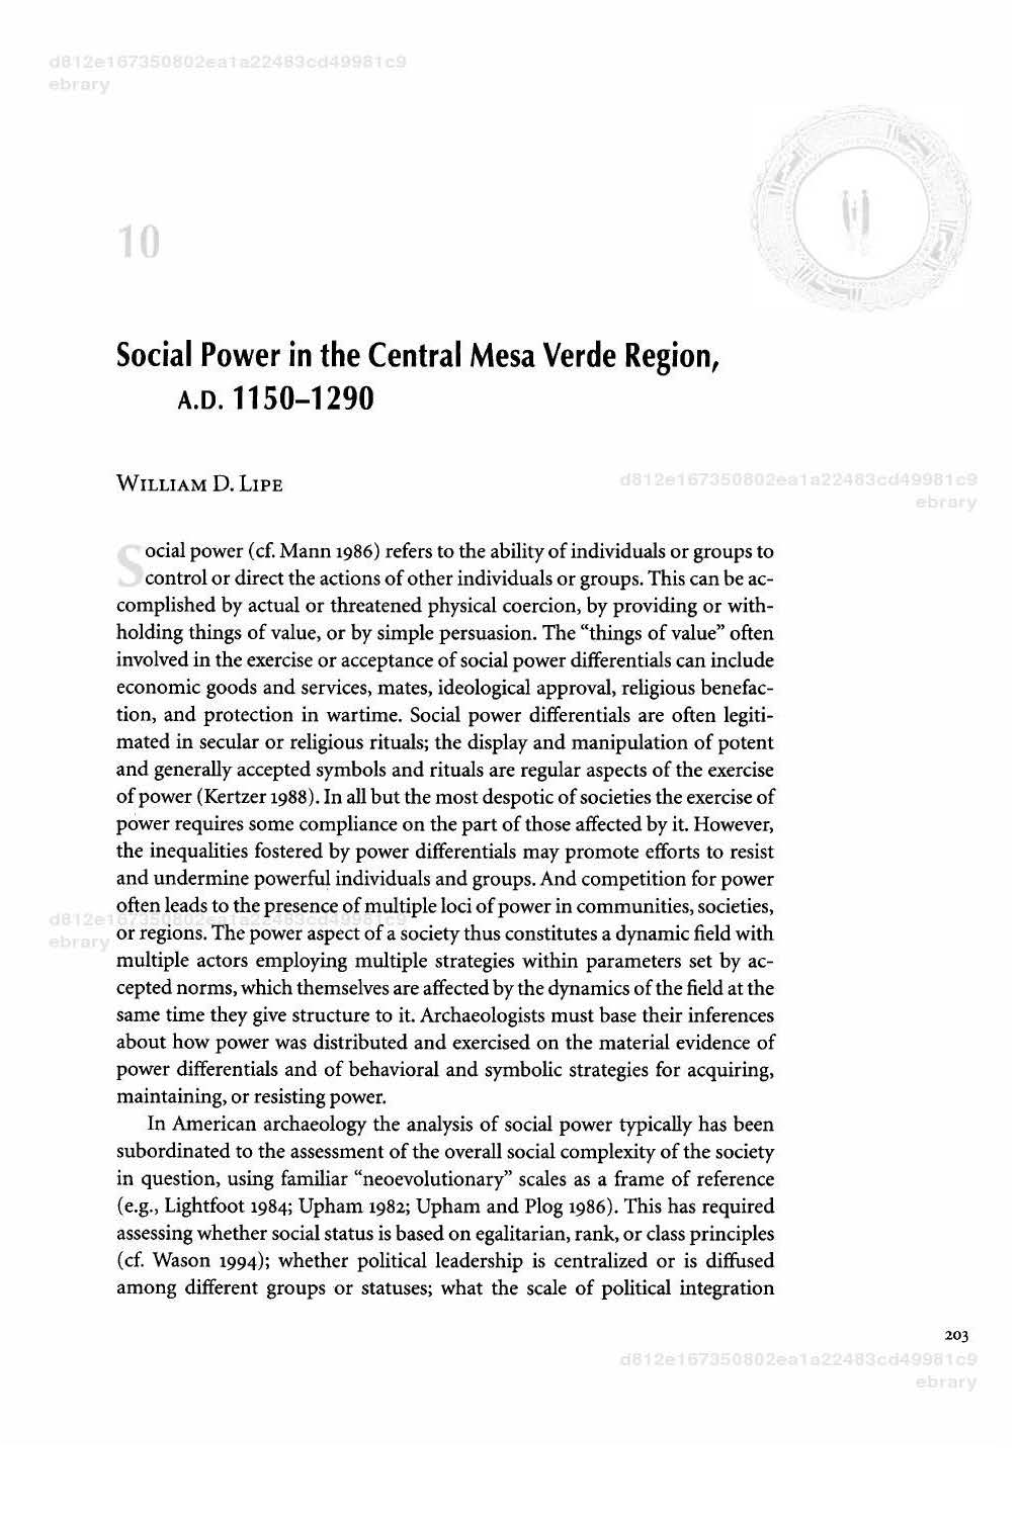 Social Power in the Central Mesa Verde Region, A.D